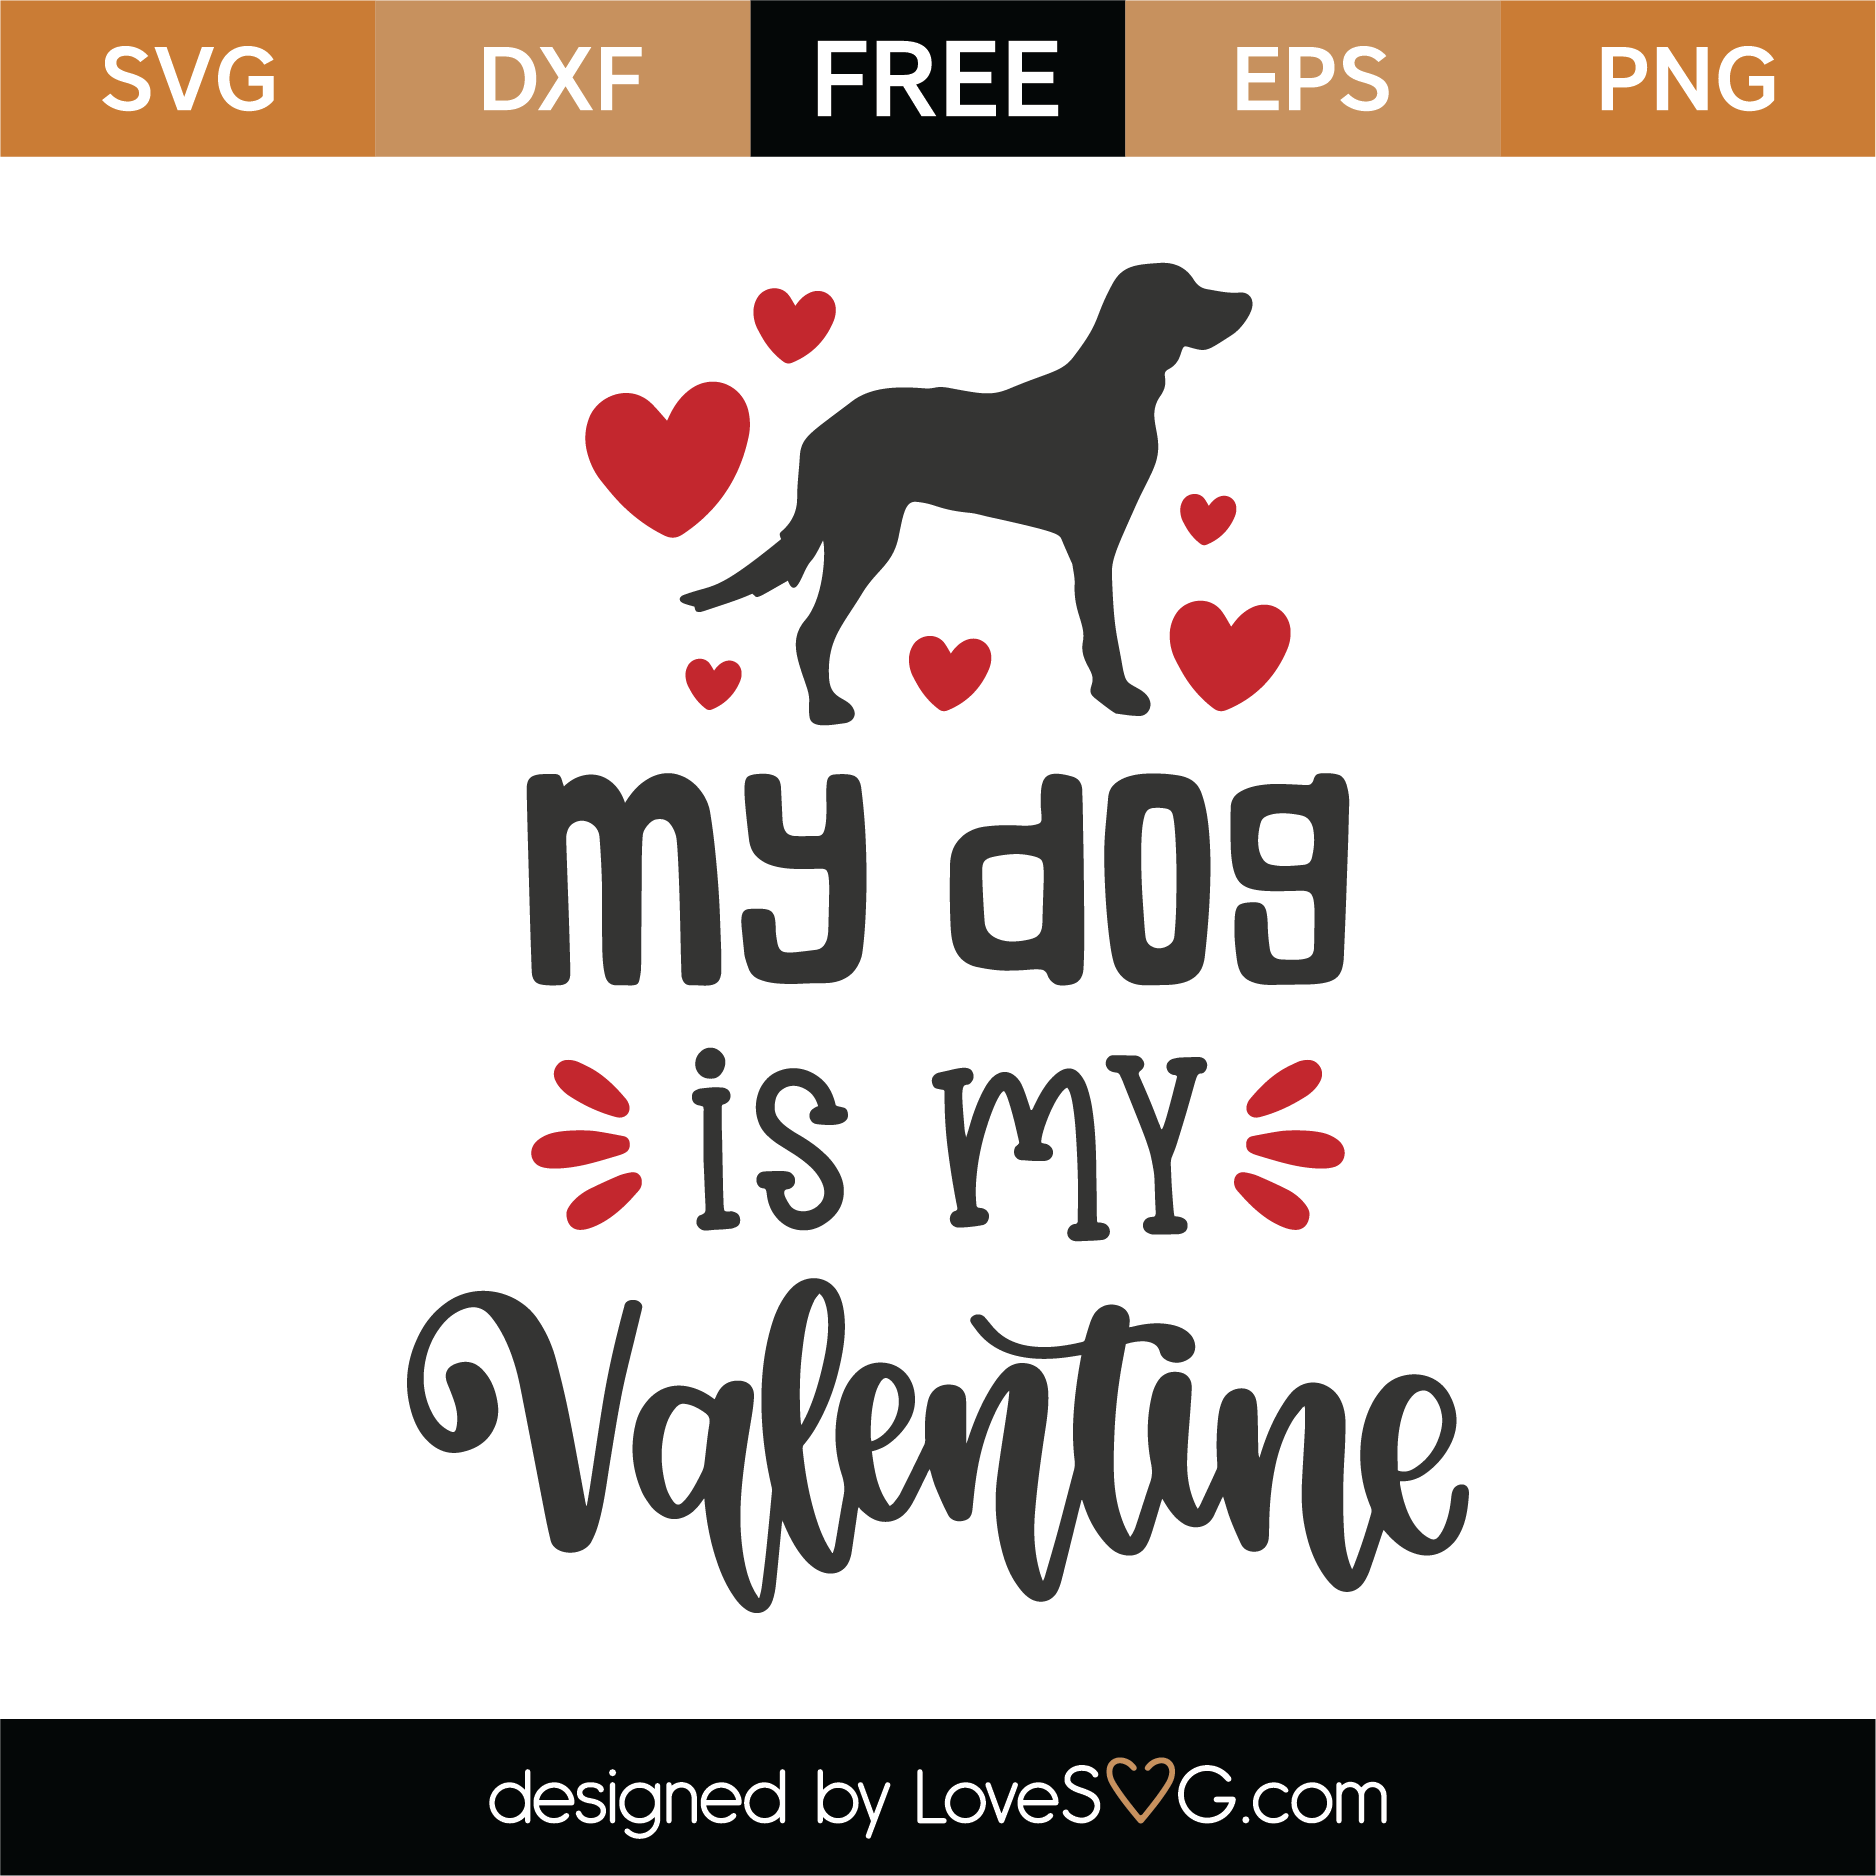 Download Free My Dog Is My Valentine SVG Cut File | Lovesvg.com